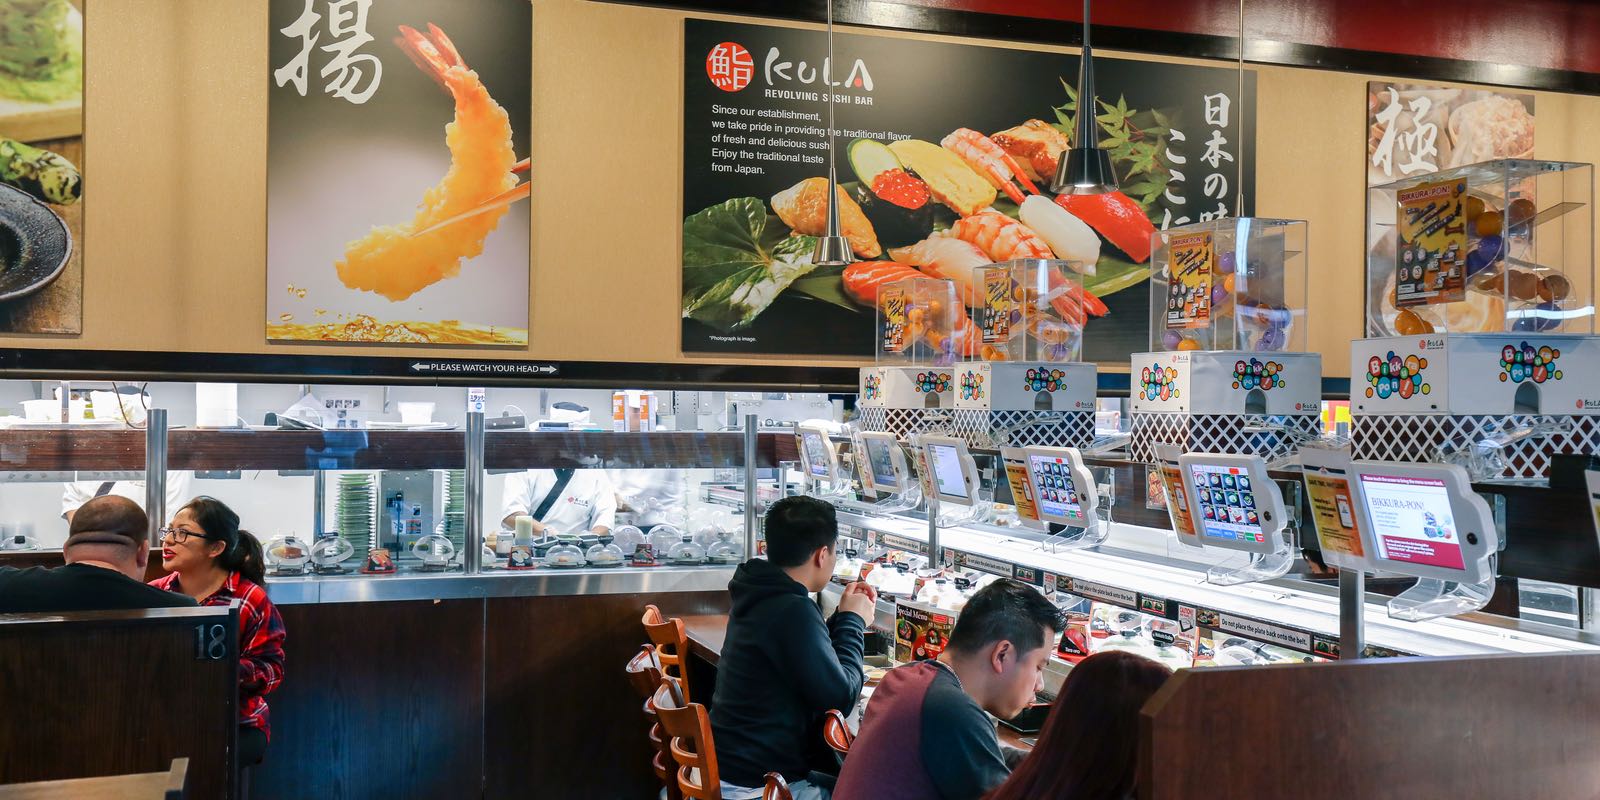 Kura Revolving Sushi Bar - Culinary Road Trips: Convoy Street to Black Mountain Road